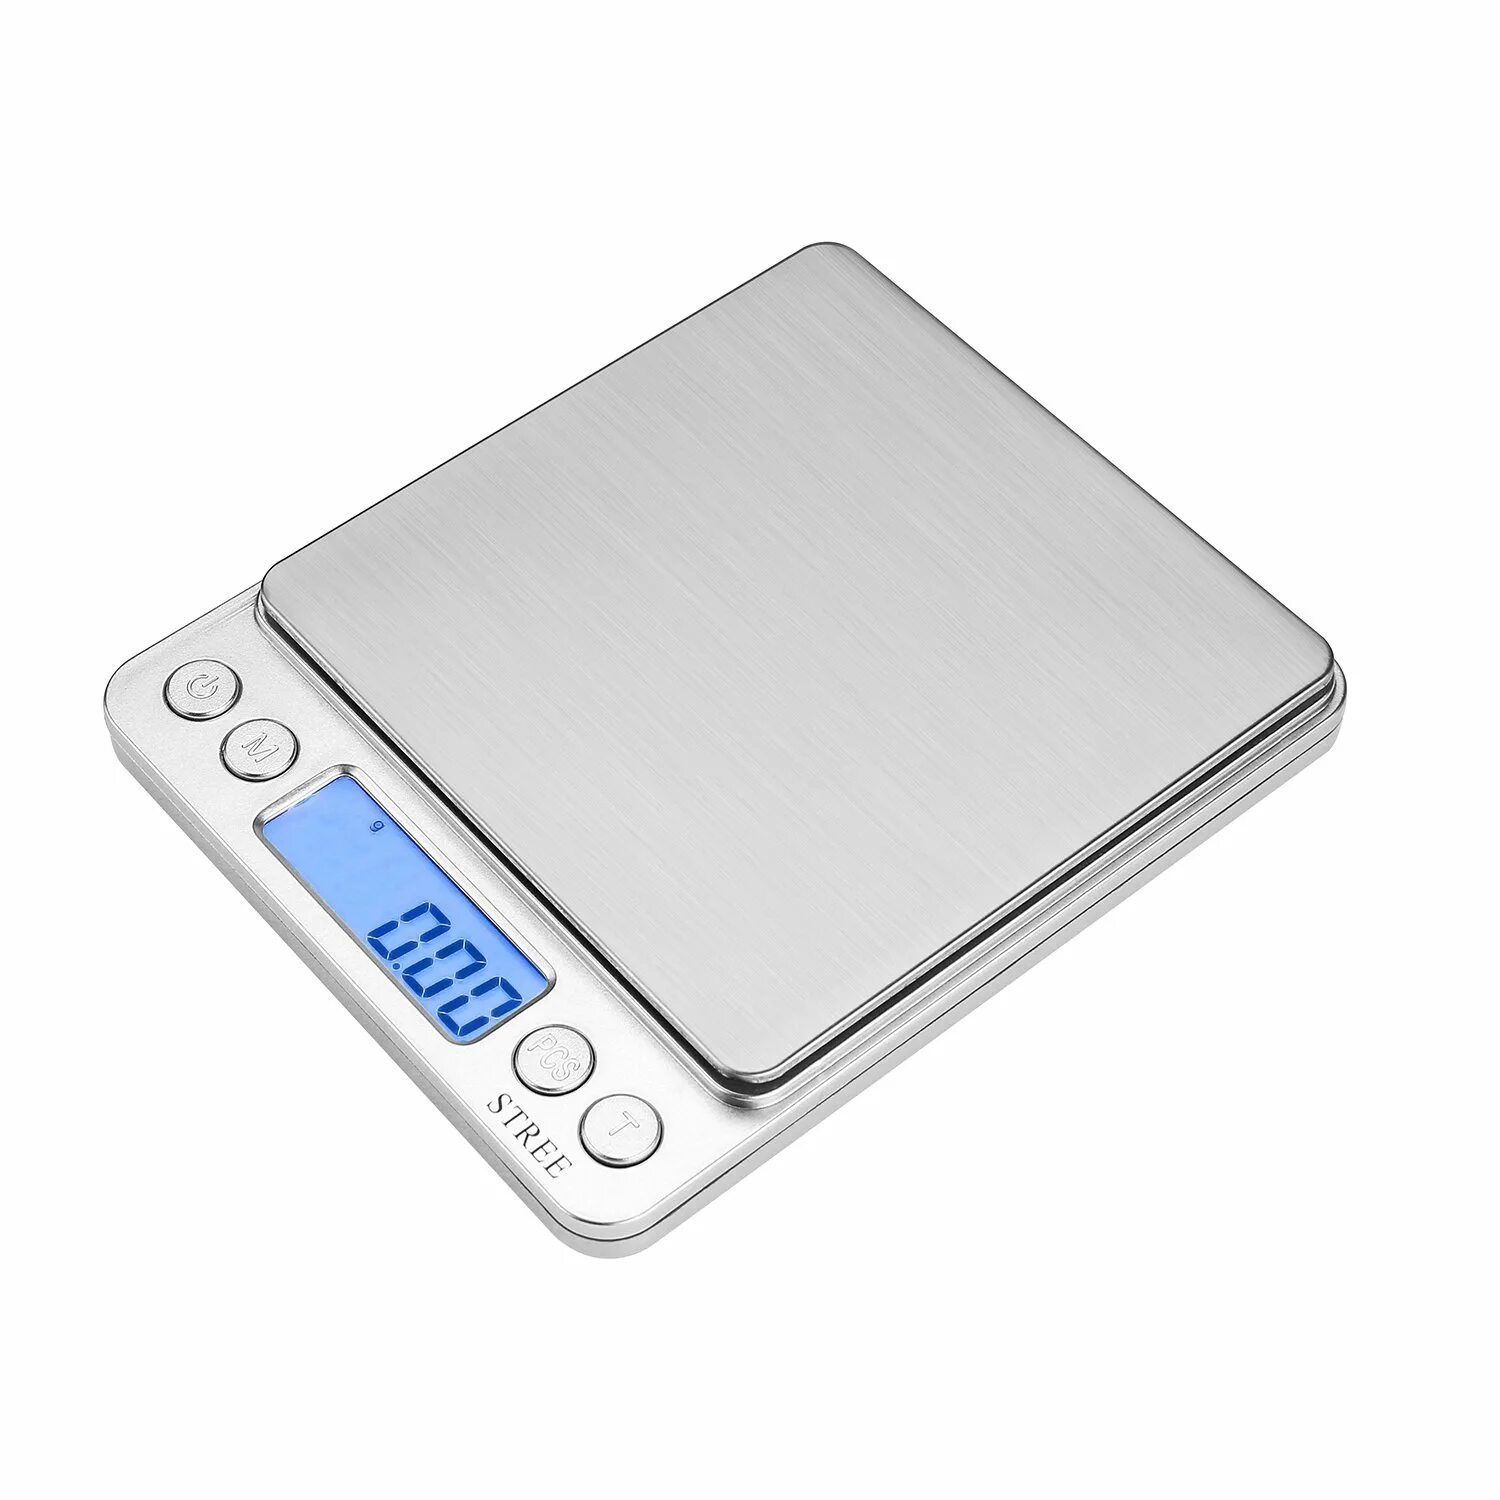 Весы компактные HT-500 (500*0,1г). Весы с крючком. Digital Multi- function food Kitchen Scale. Весы с крышкой willbers. Весы с какого